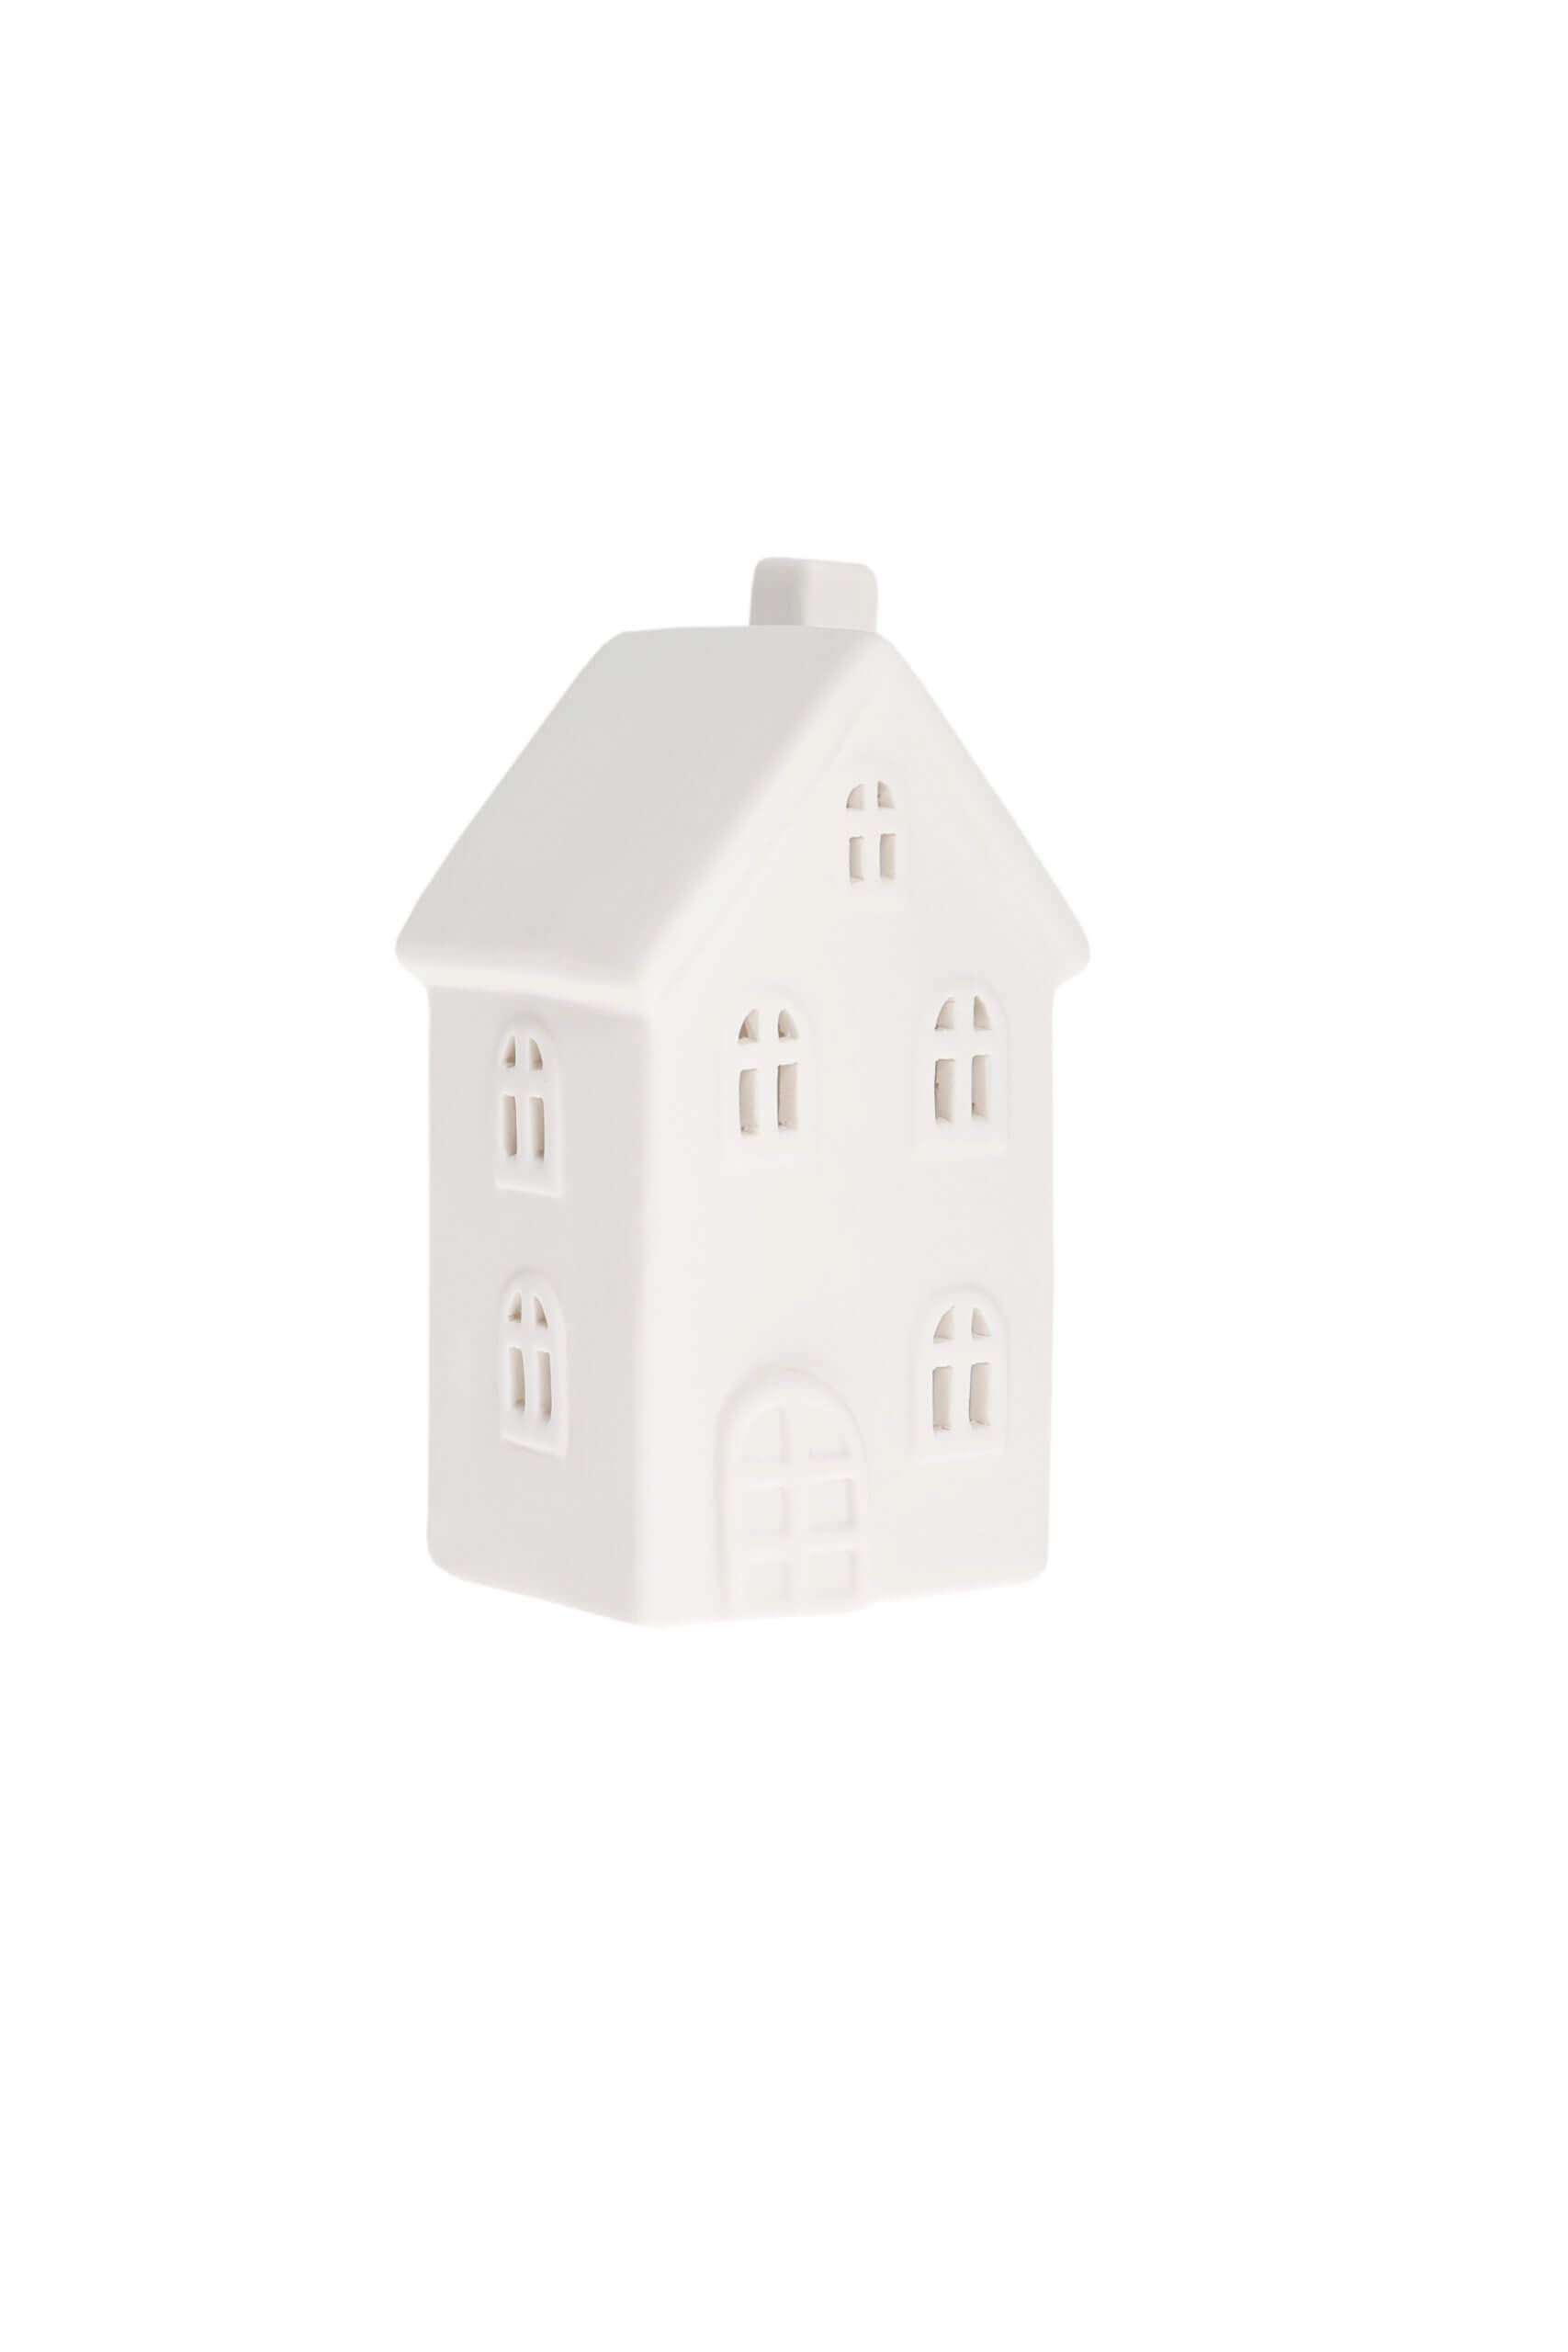 Ceramic House | Byn #10 | White | by Storefactory - Lifestory